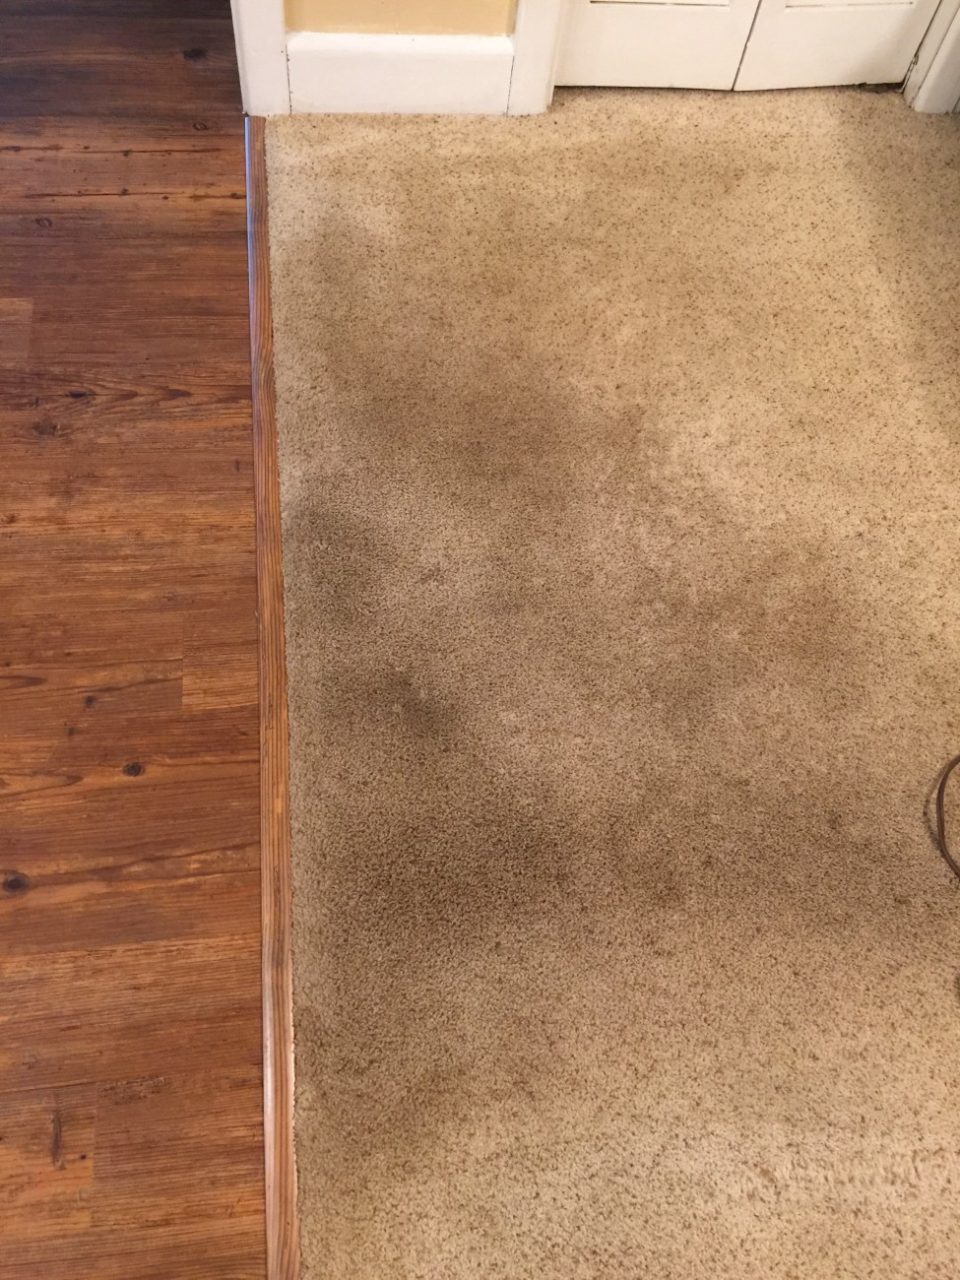 Carpet Before